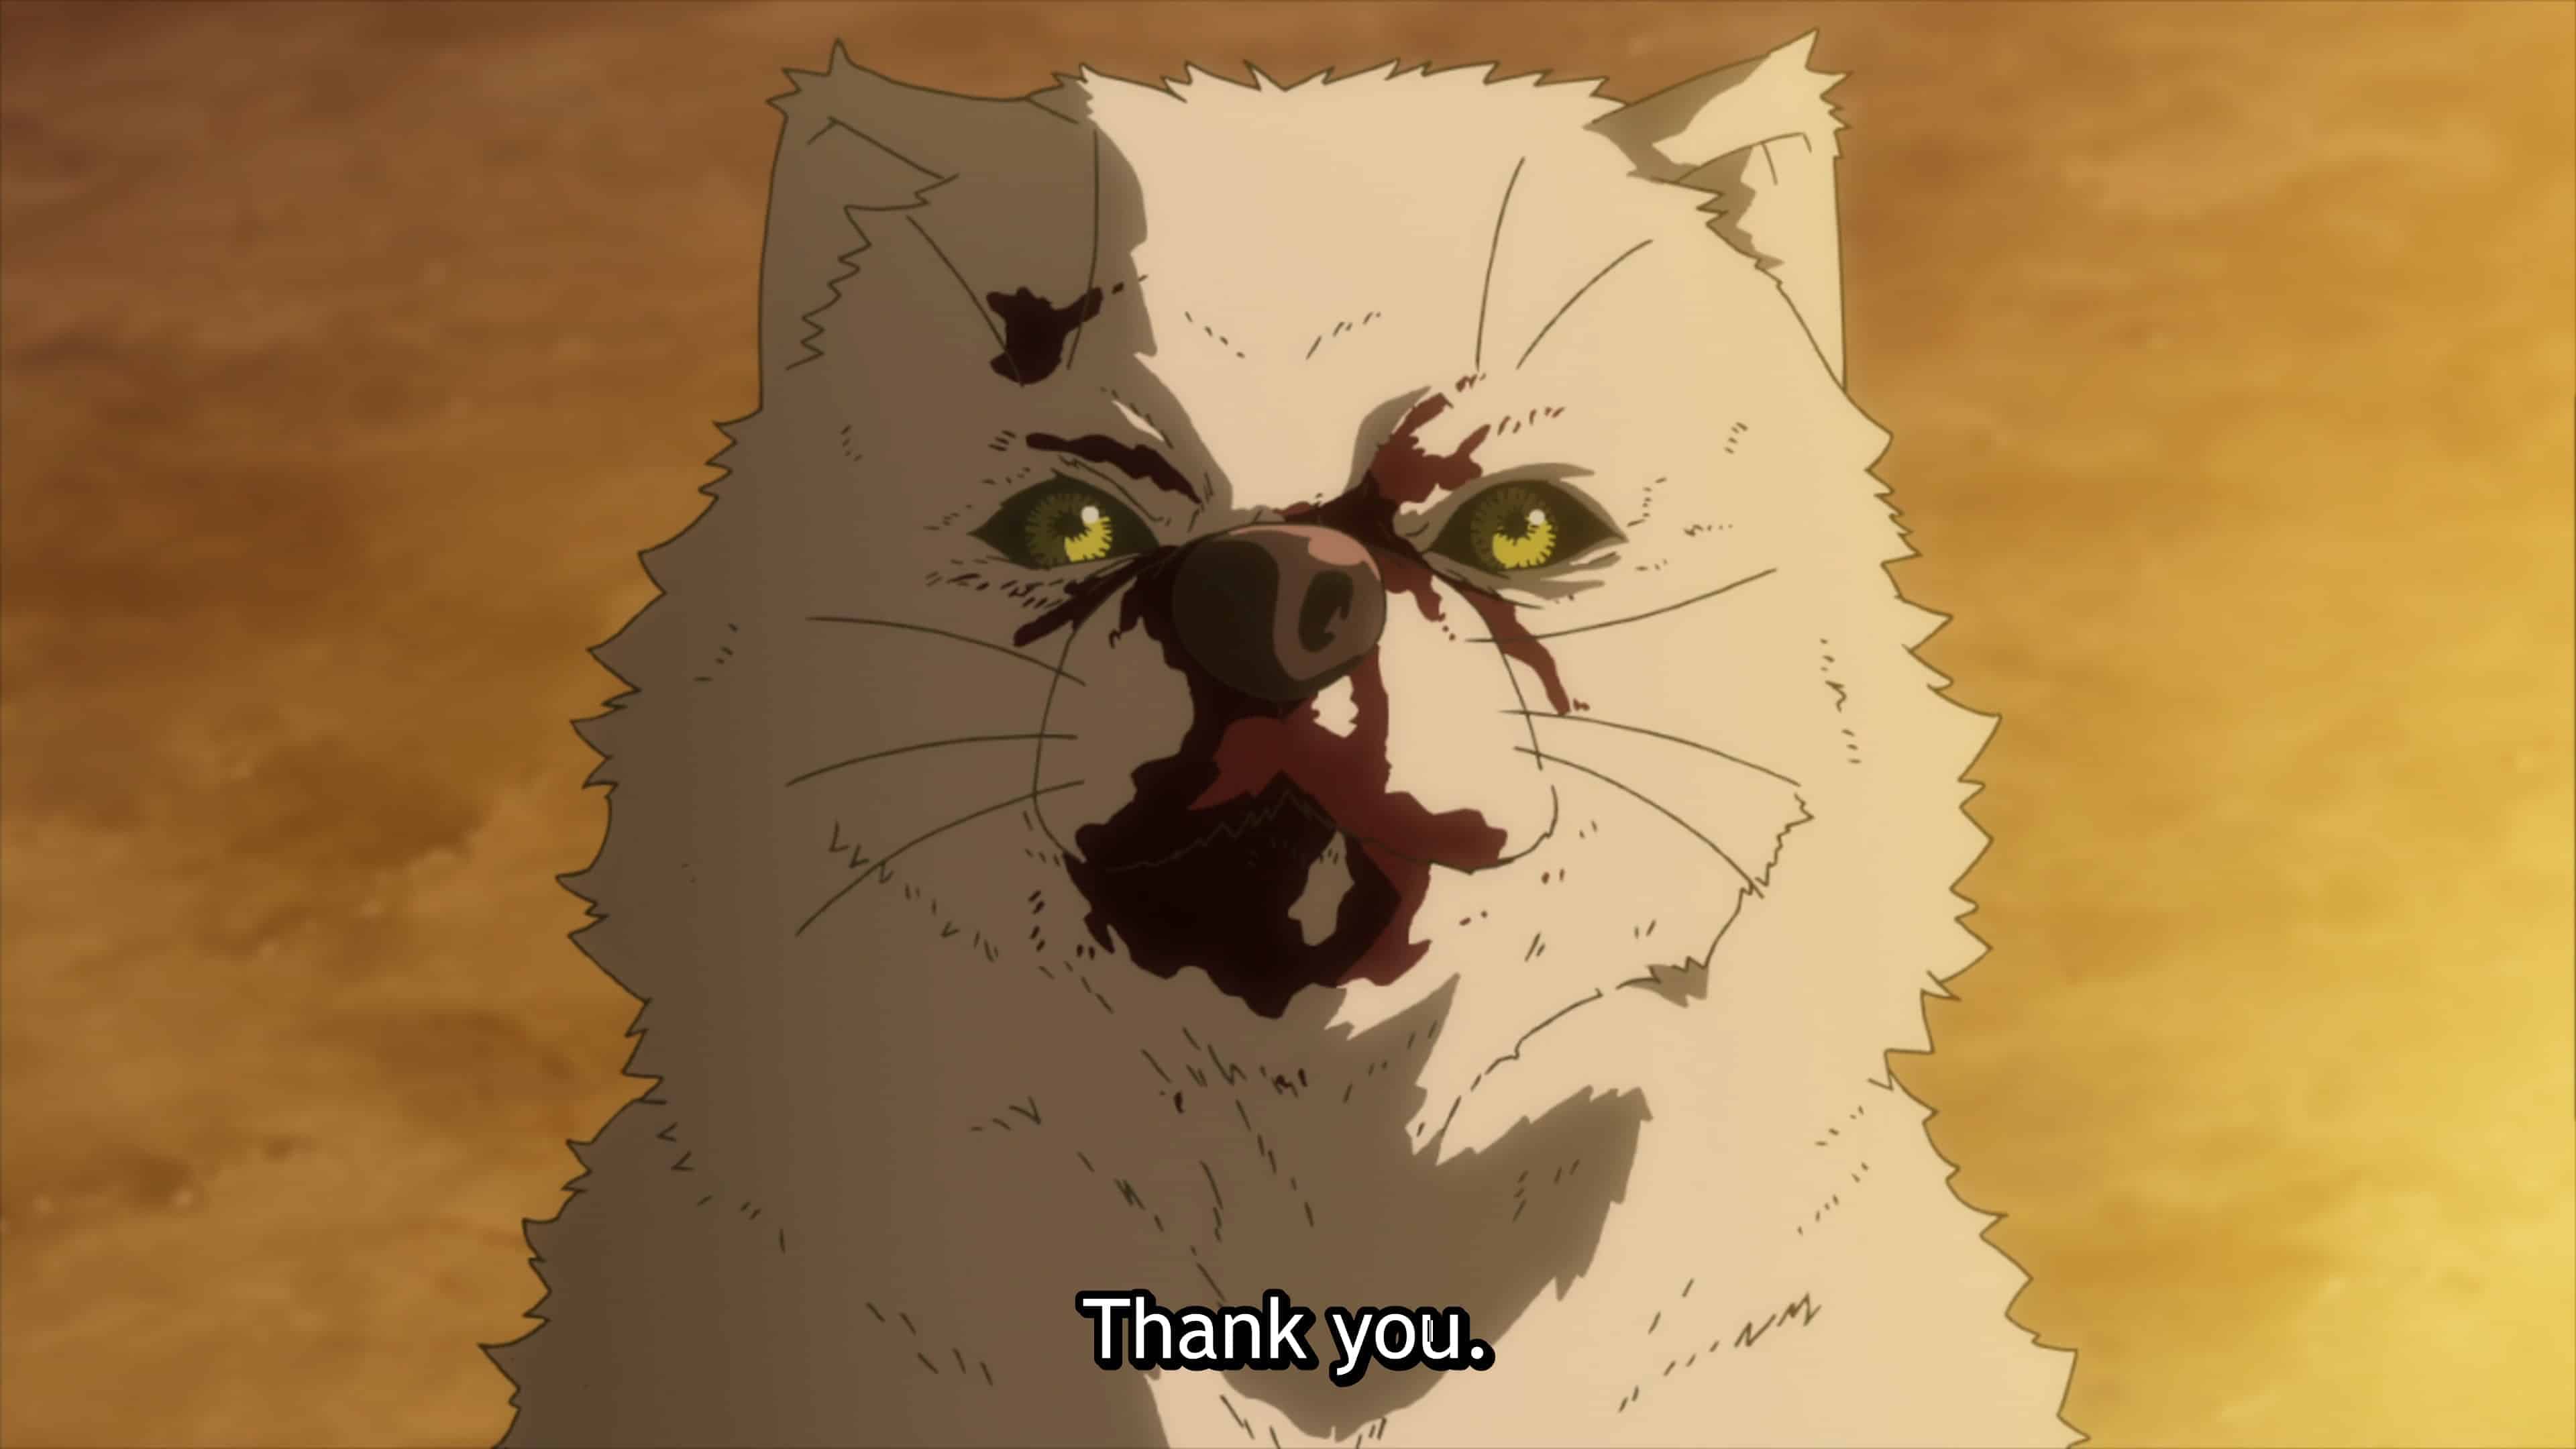 Fushi, in wolf form, saying "Thank you."